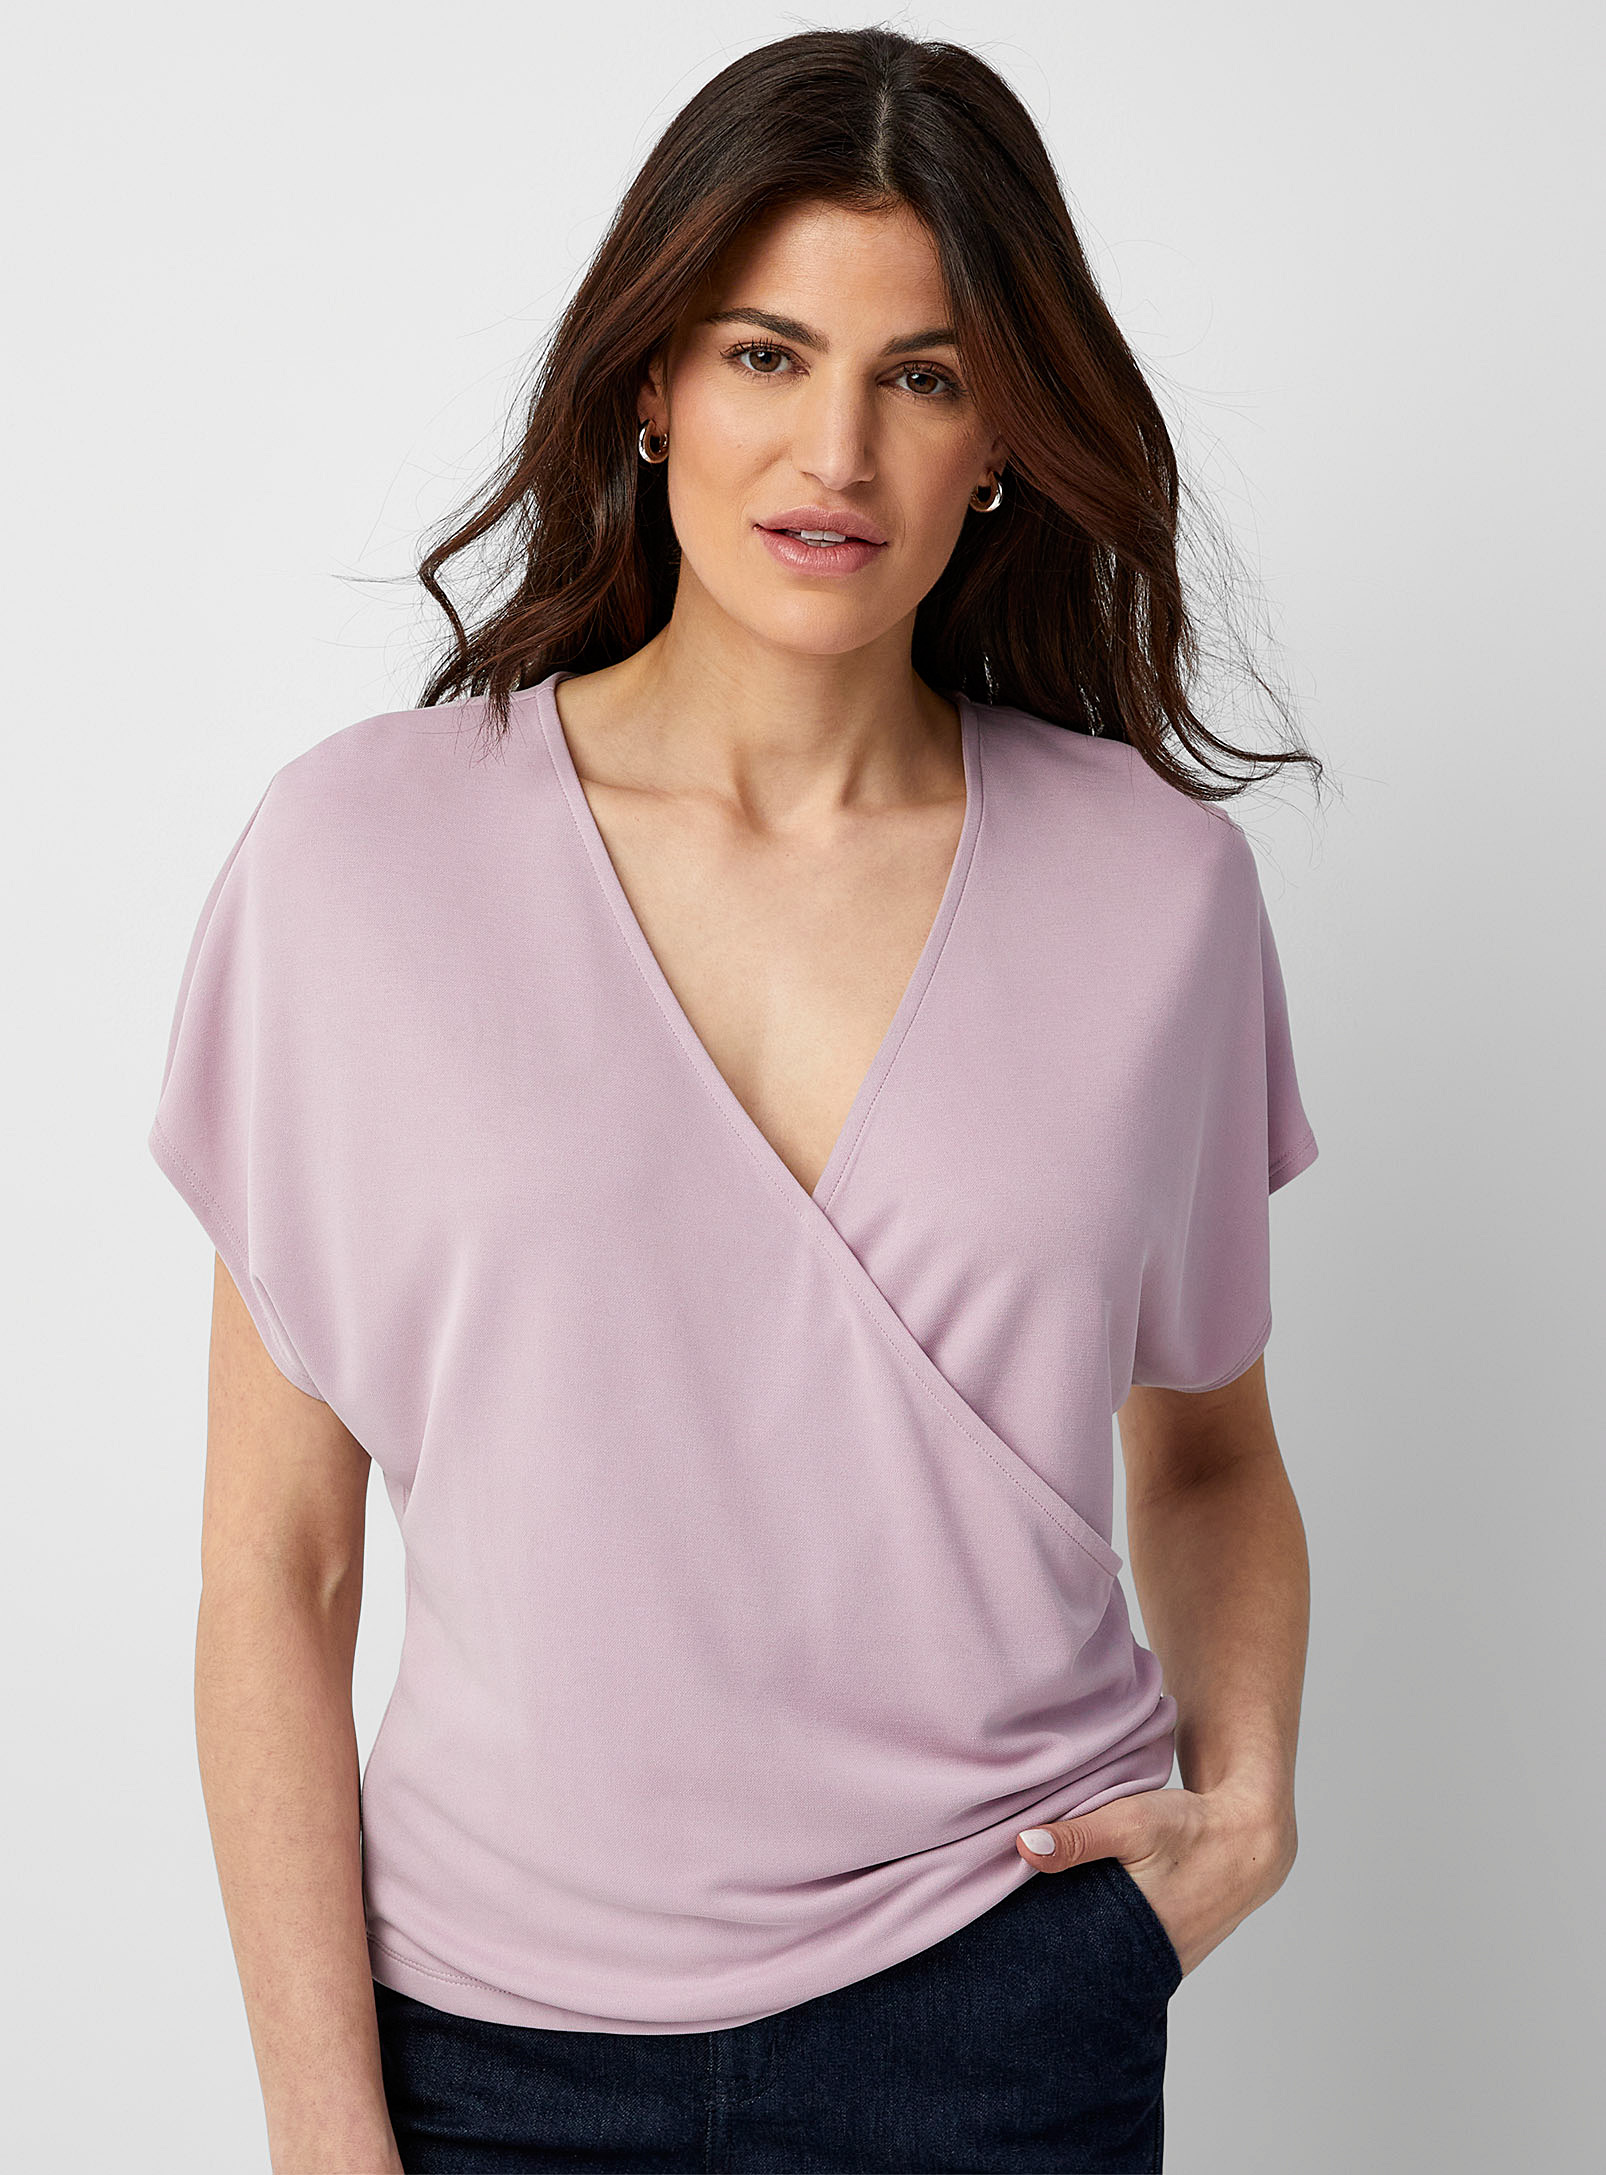 Contemporaine - Women's Crossover neckline piqué T-shirt